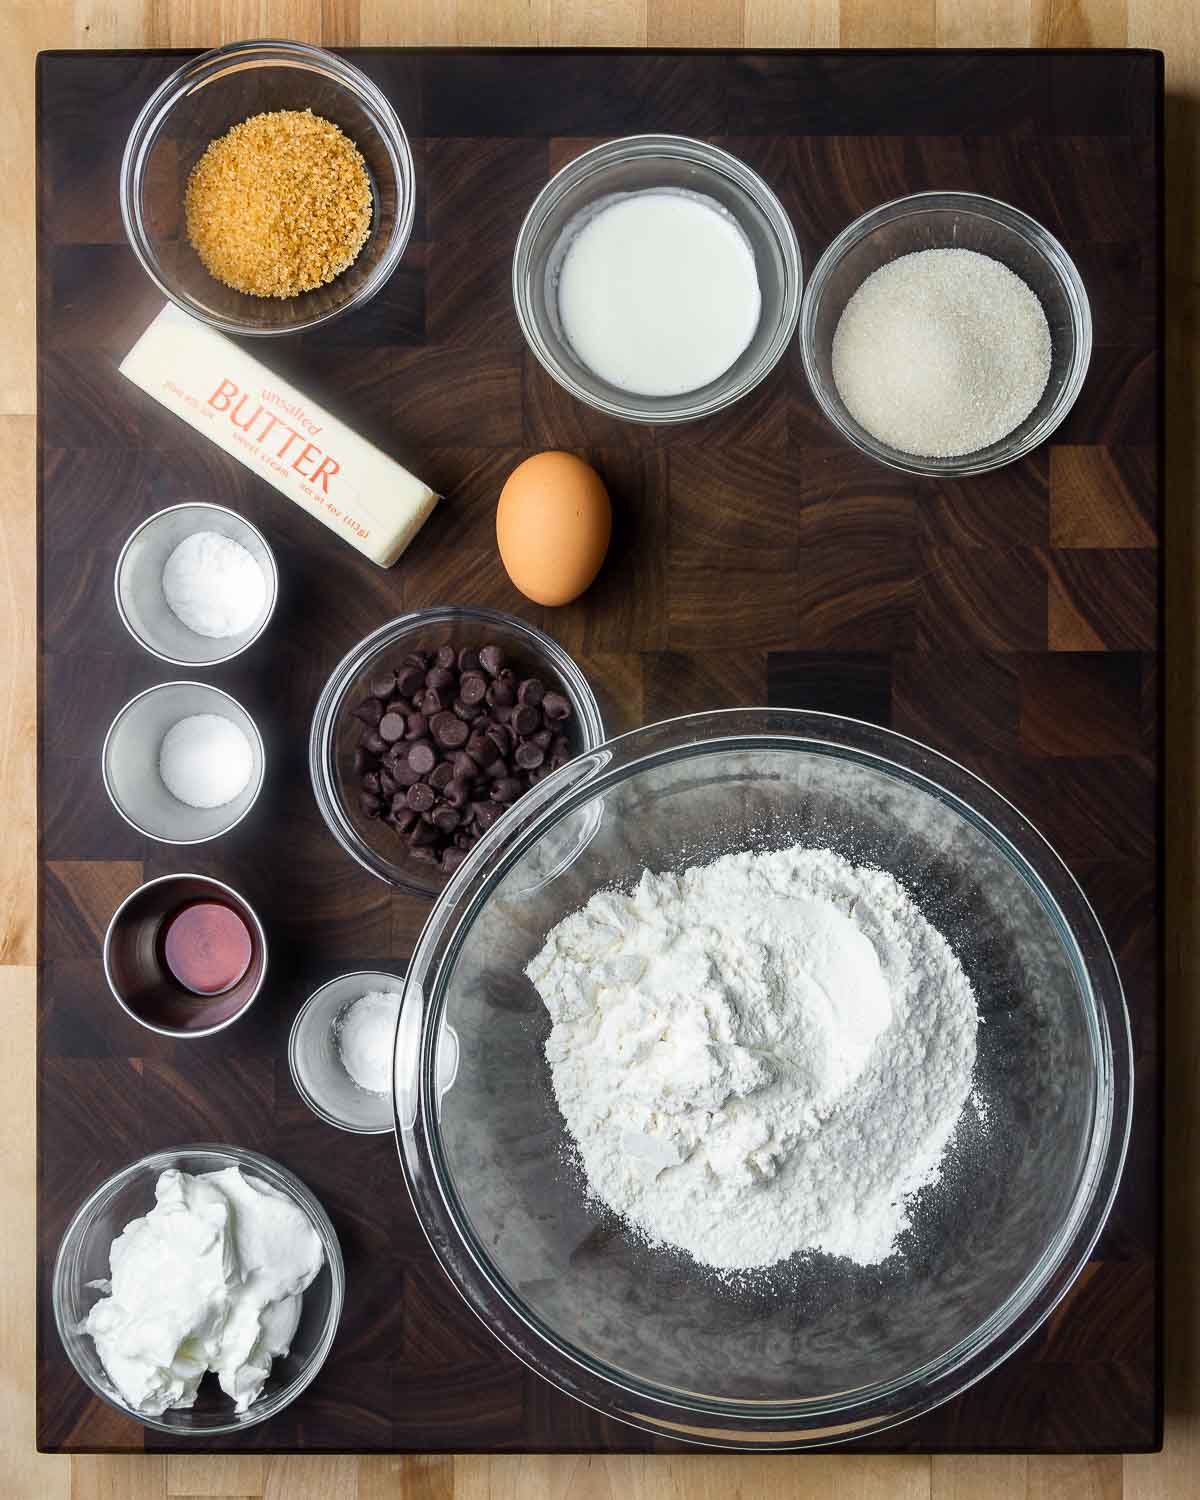 Ingredients shown: turbinado sugar, heavy cream, sugar, butter, 1 egg, baking powder and soda, chocolate chips, vanilla, salt, flour, and sour cream.